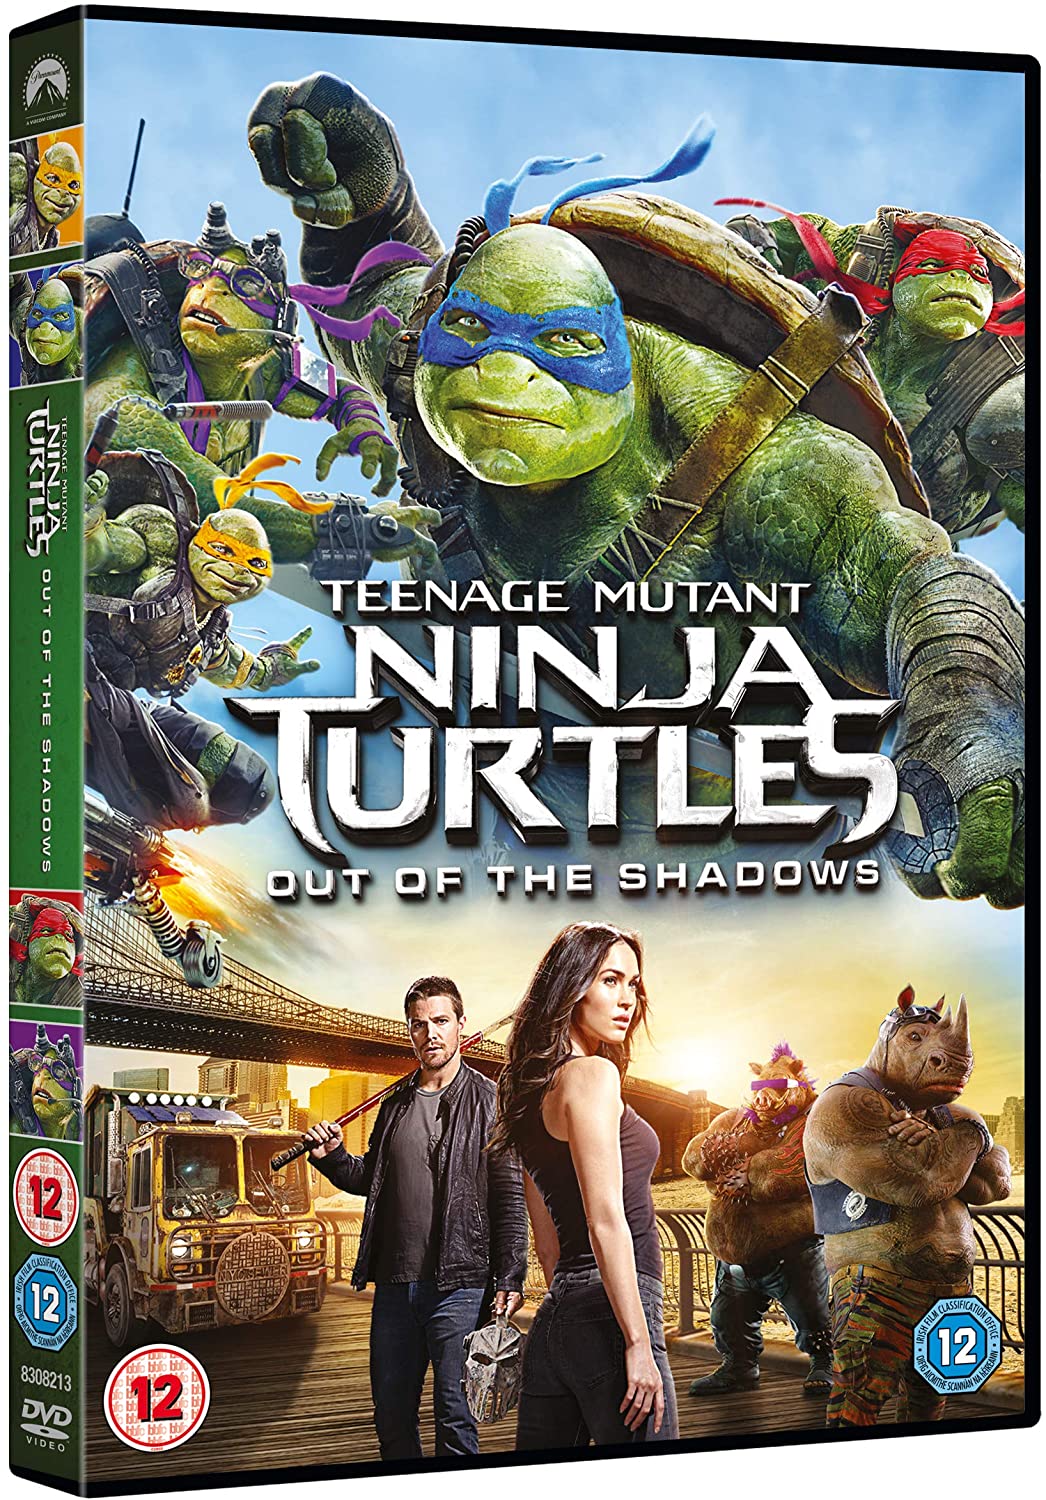 Teenage Mutant Ninja Turtles: Out of the Shadows - Action/Adventure [DVD]